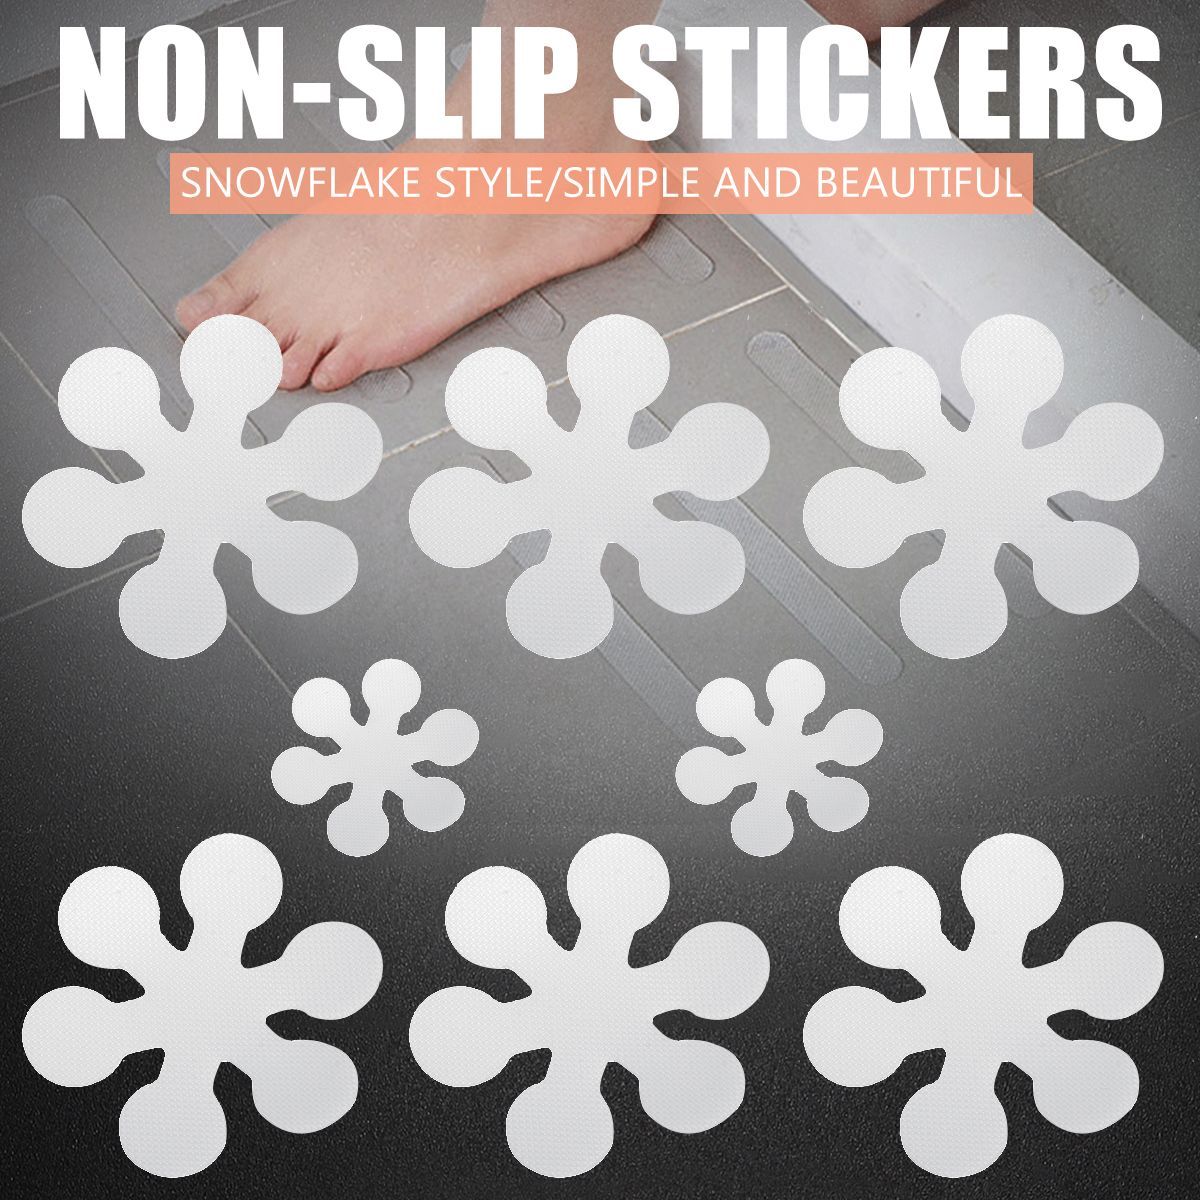 8Pcs-Snowflake-Style-Non-slip-Stickers-Home-Bathroom-Bath-Tub-Anti-Skid-Tape-Waterproof-Decorations-1555220